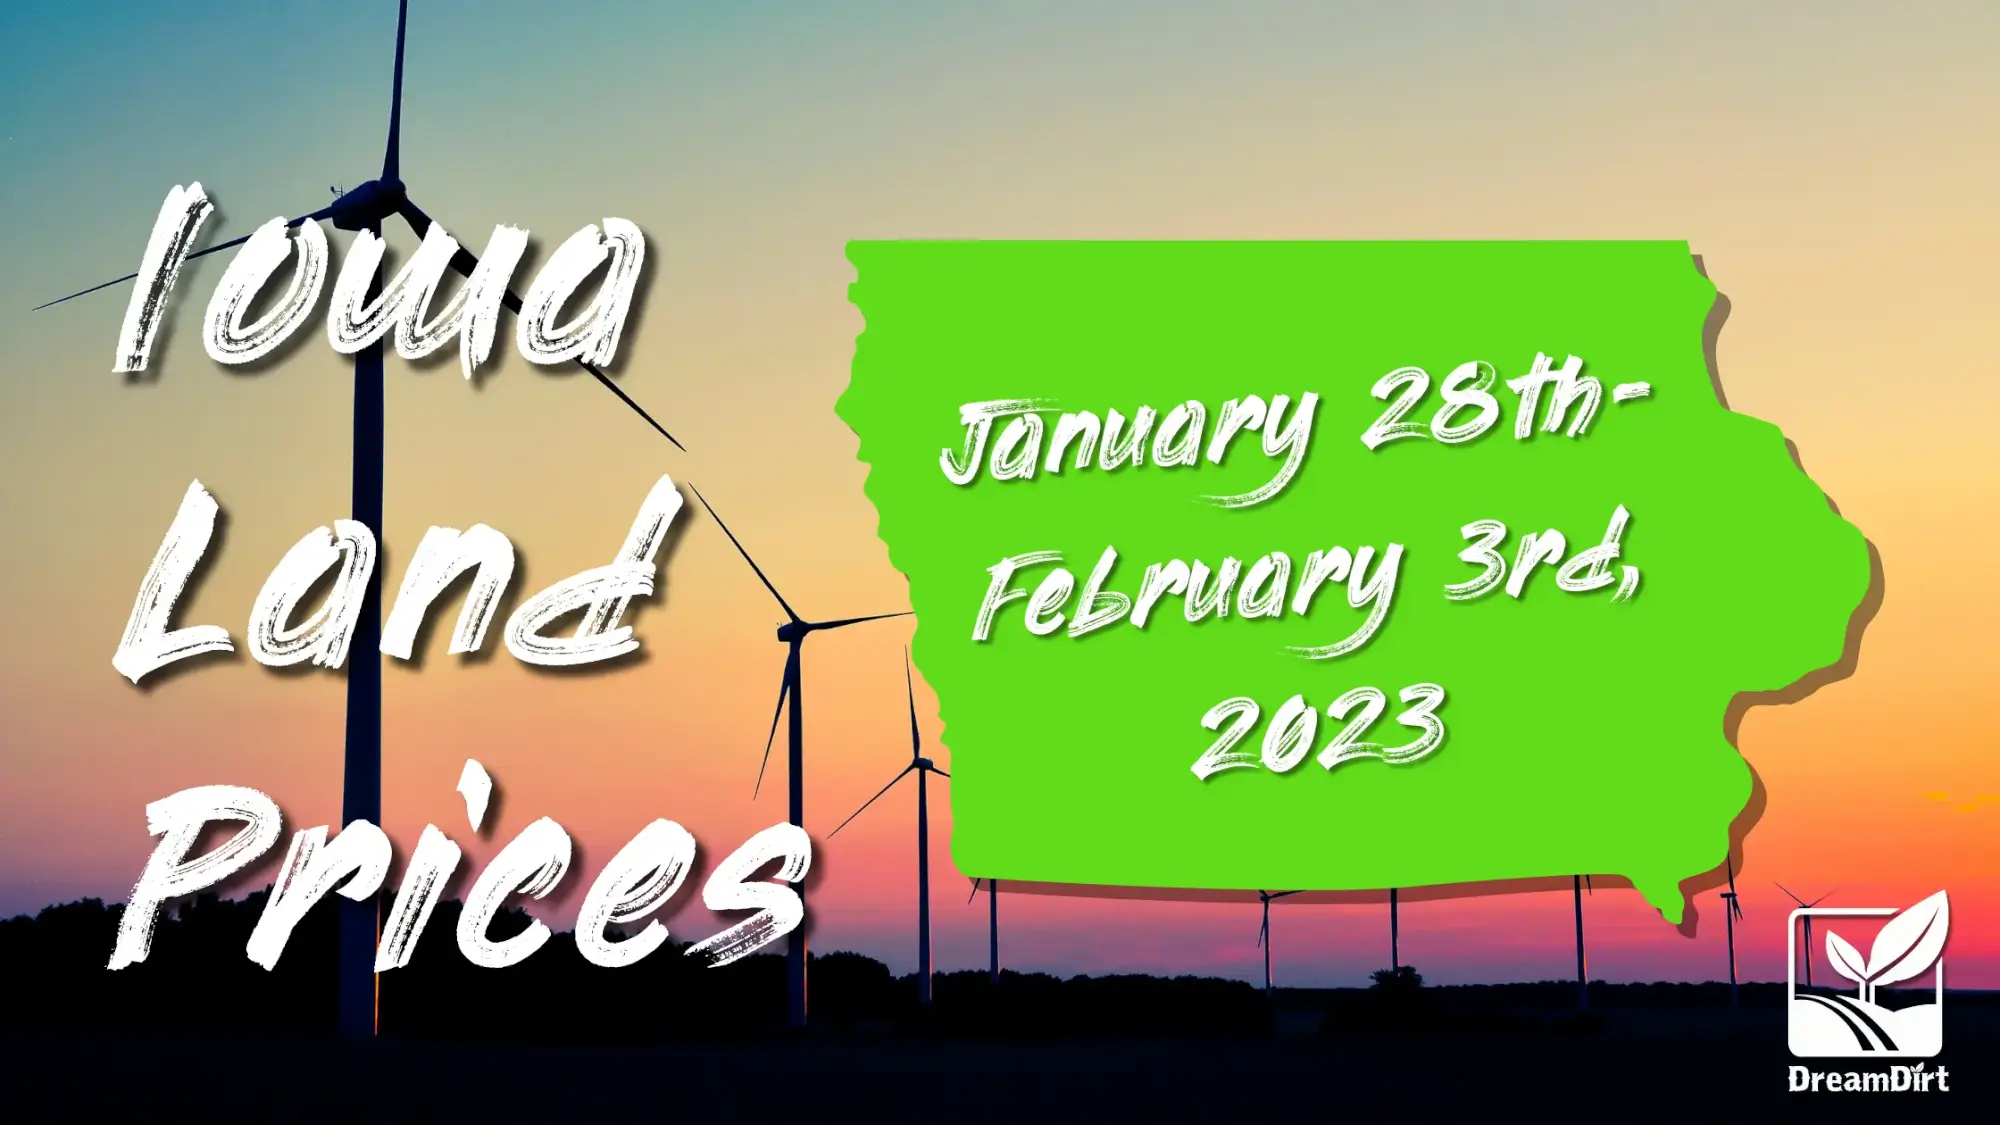 Iowa land prices Ja28 - feb 3rd